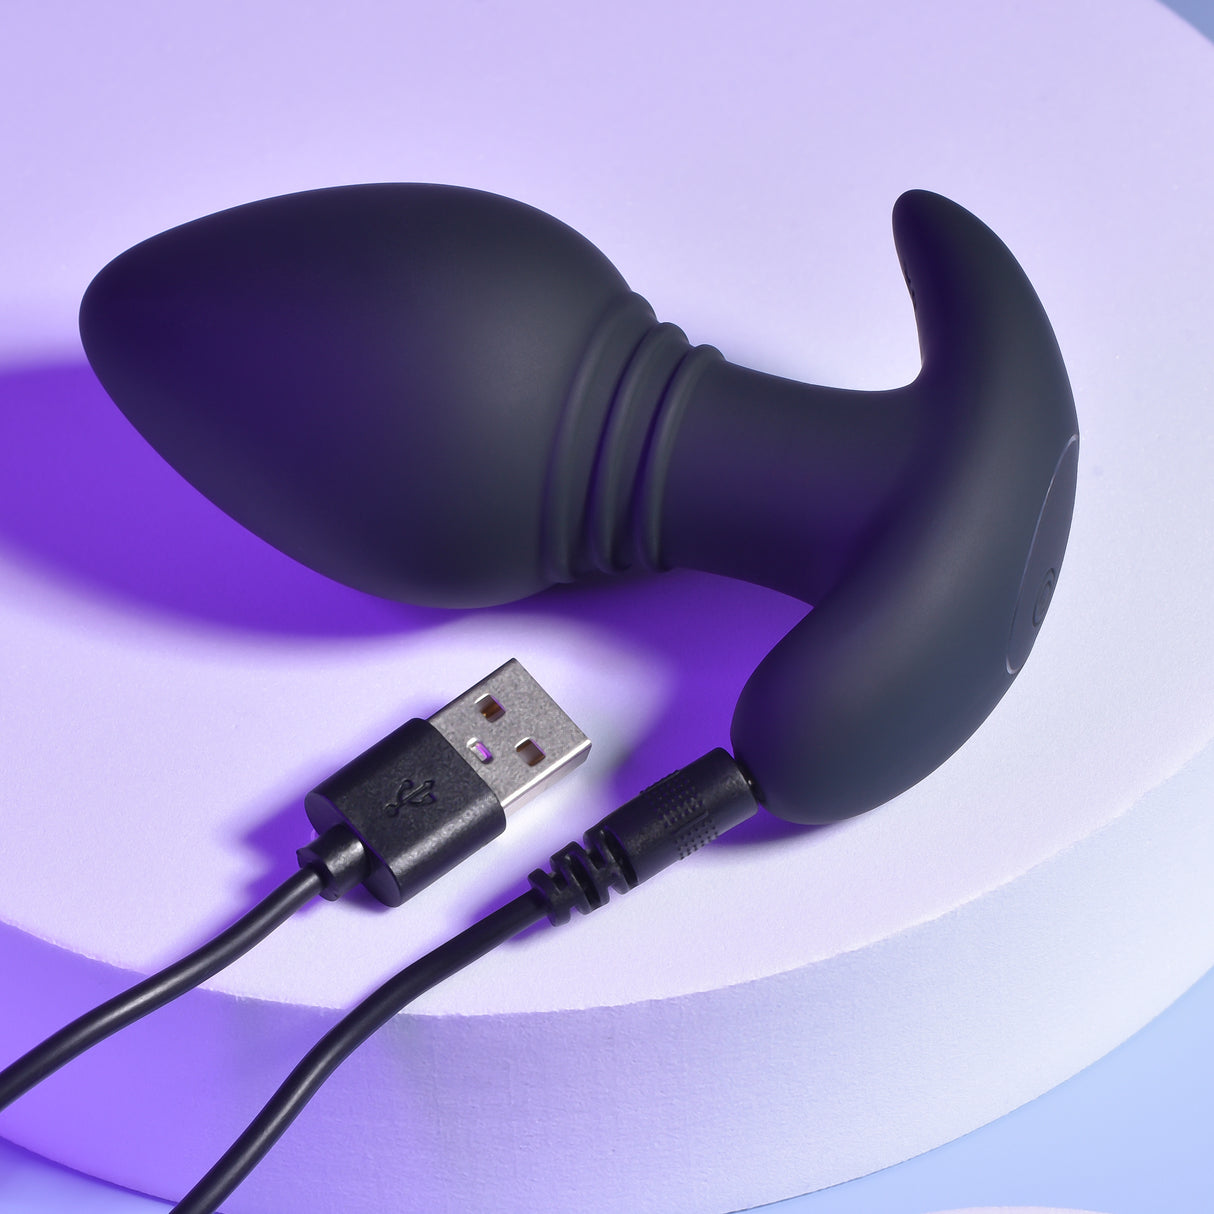 Playboy Plug & Play Remote Controlled Vibrating Anal Plug